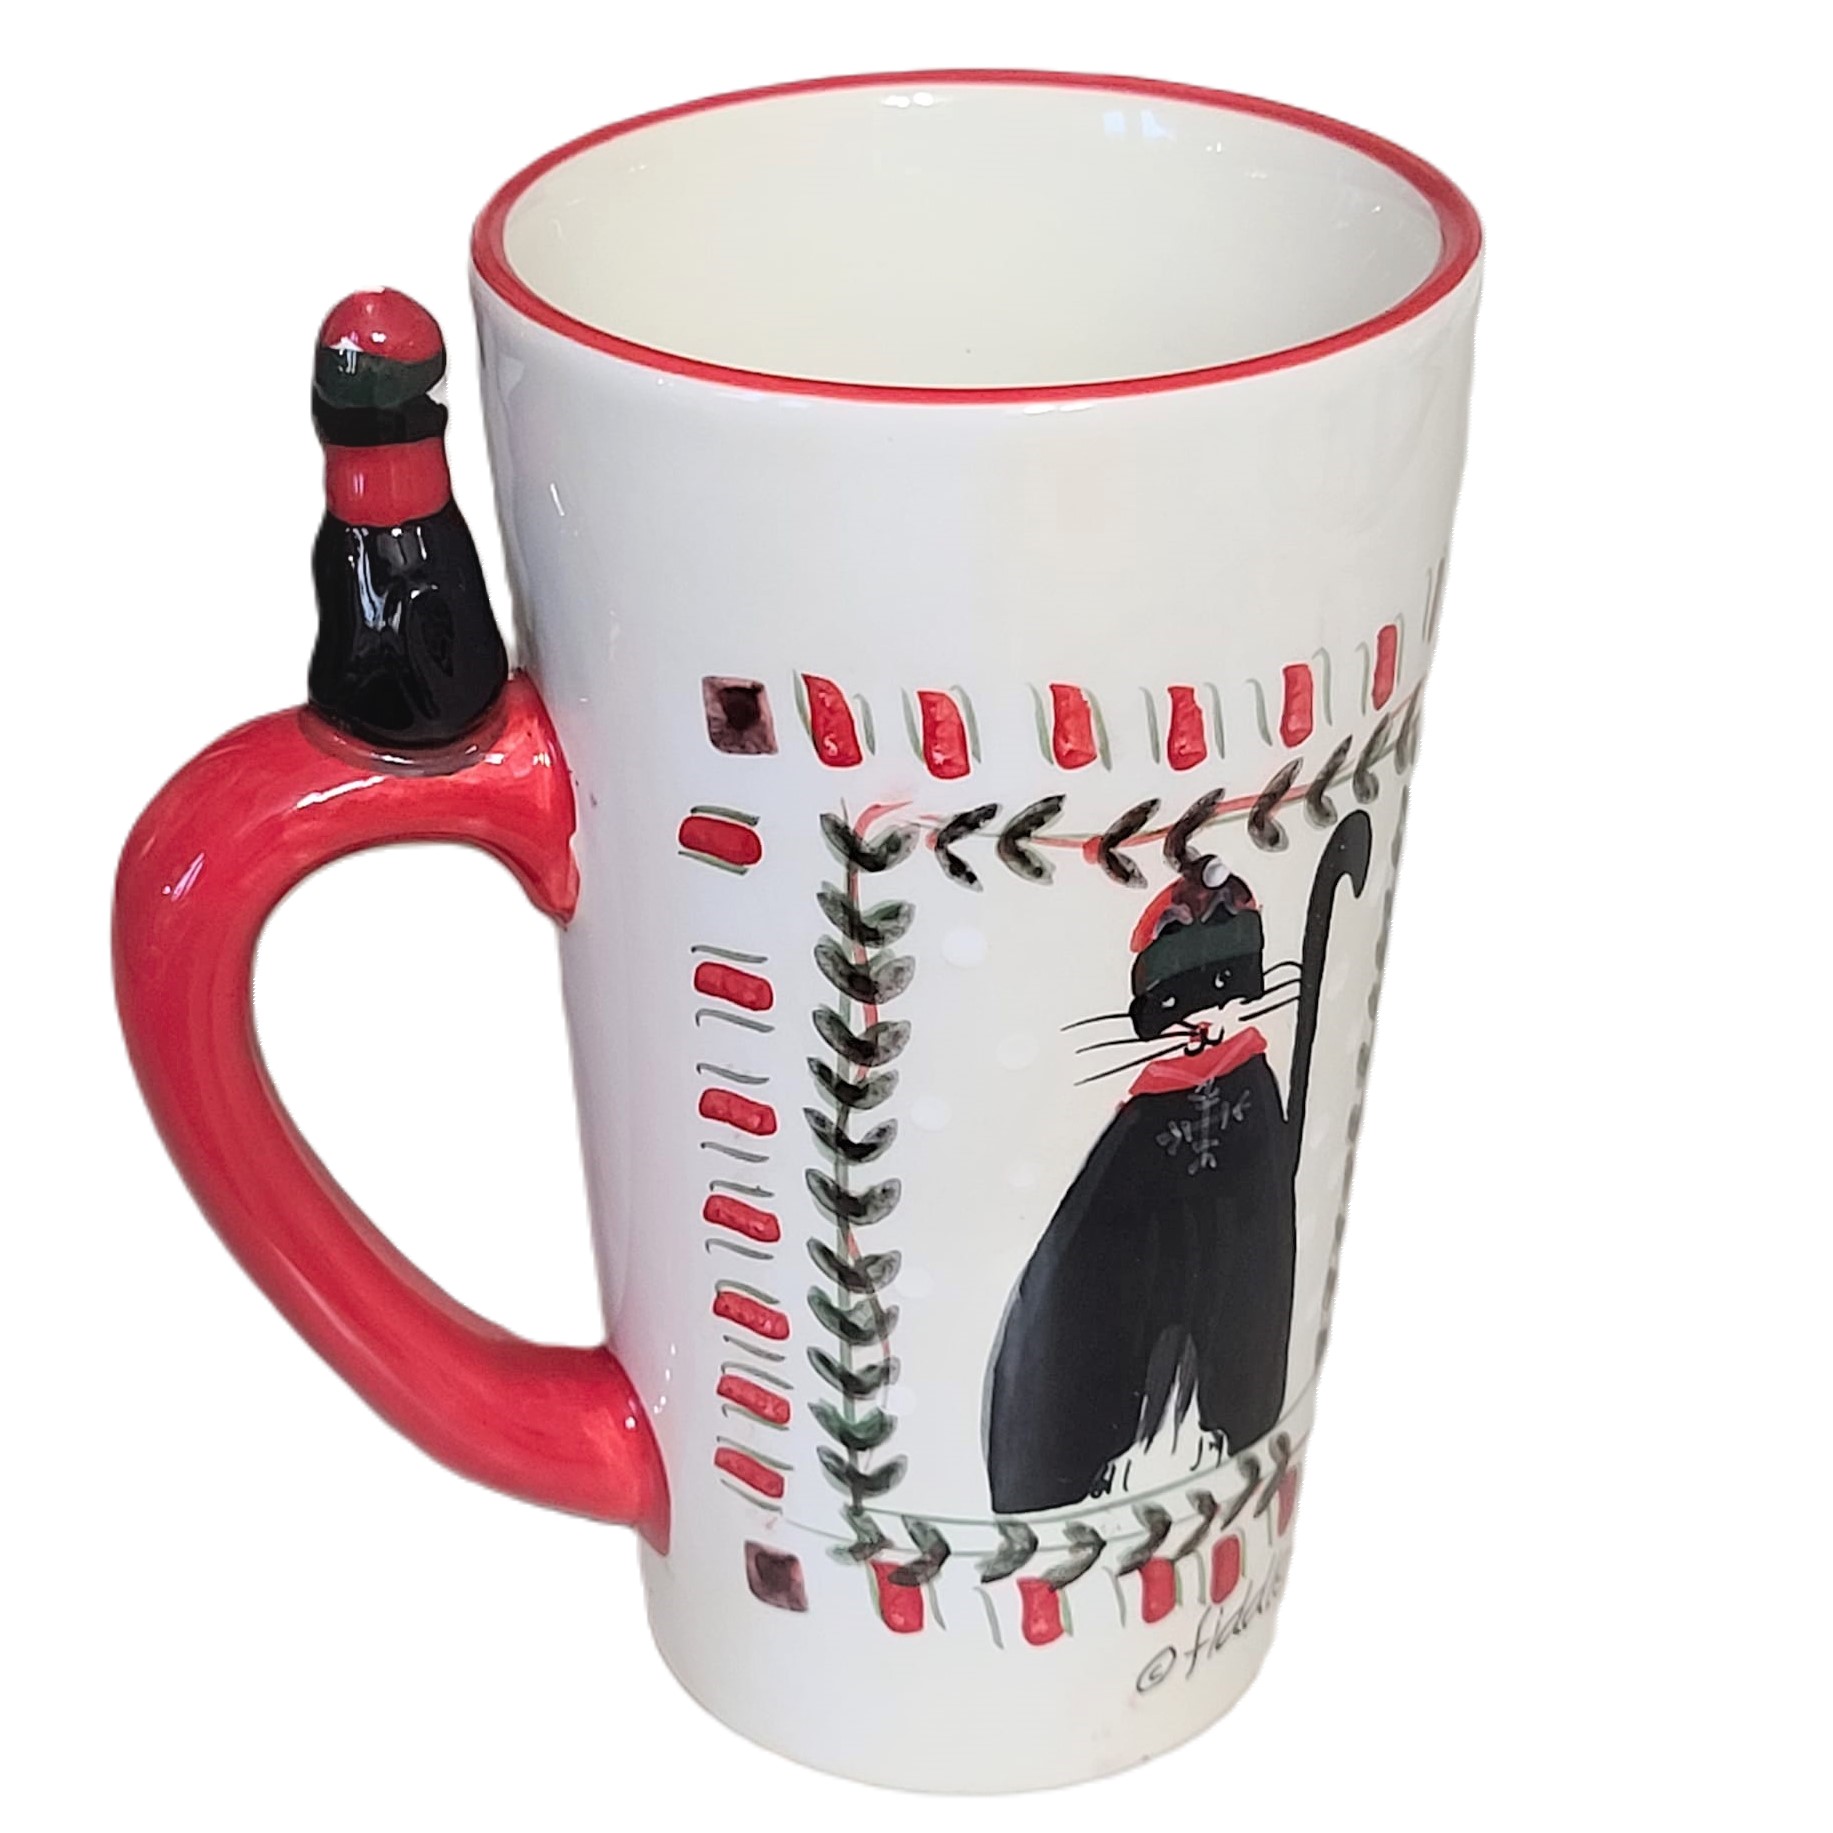 Sakura Fiddlestix Christmas Tall Mug Black Cat